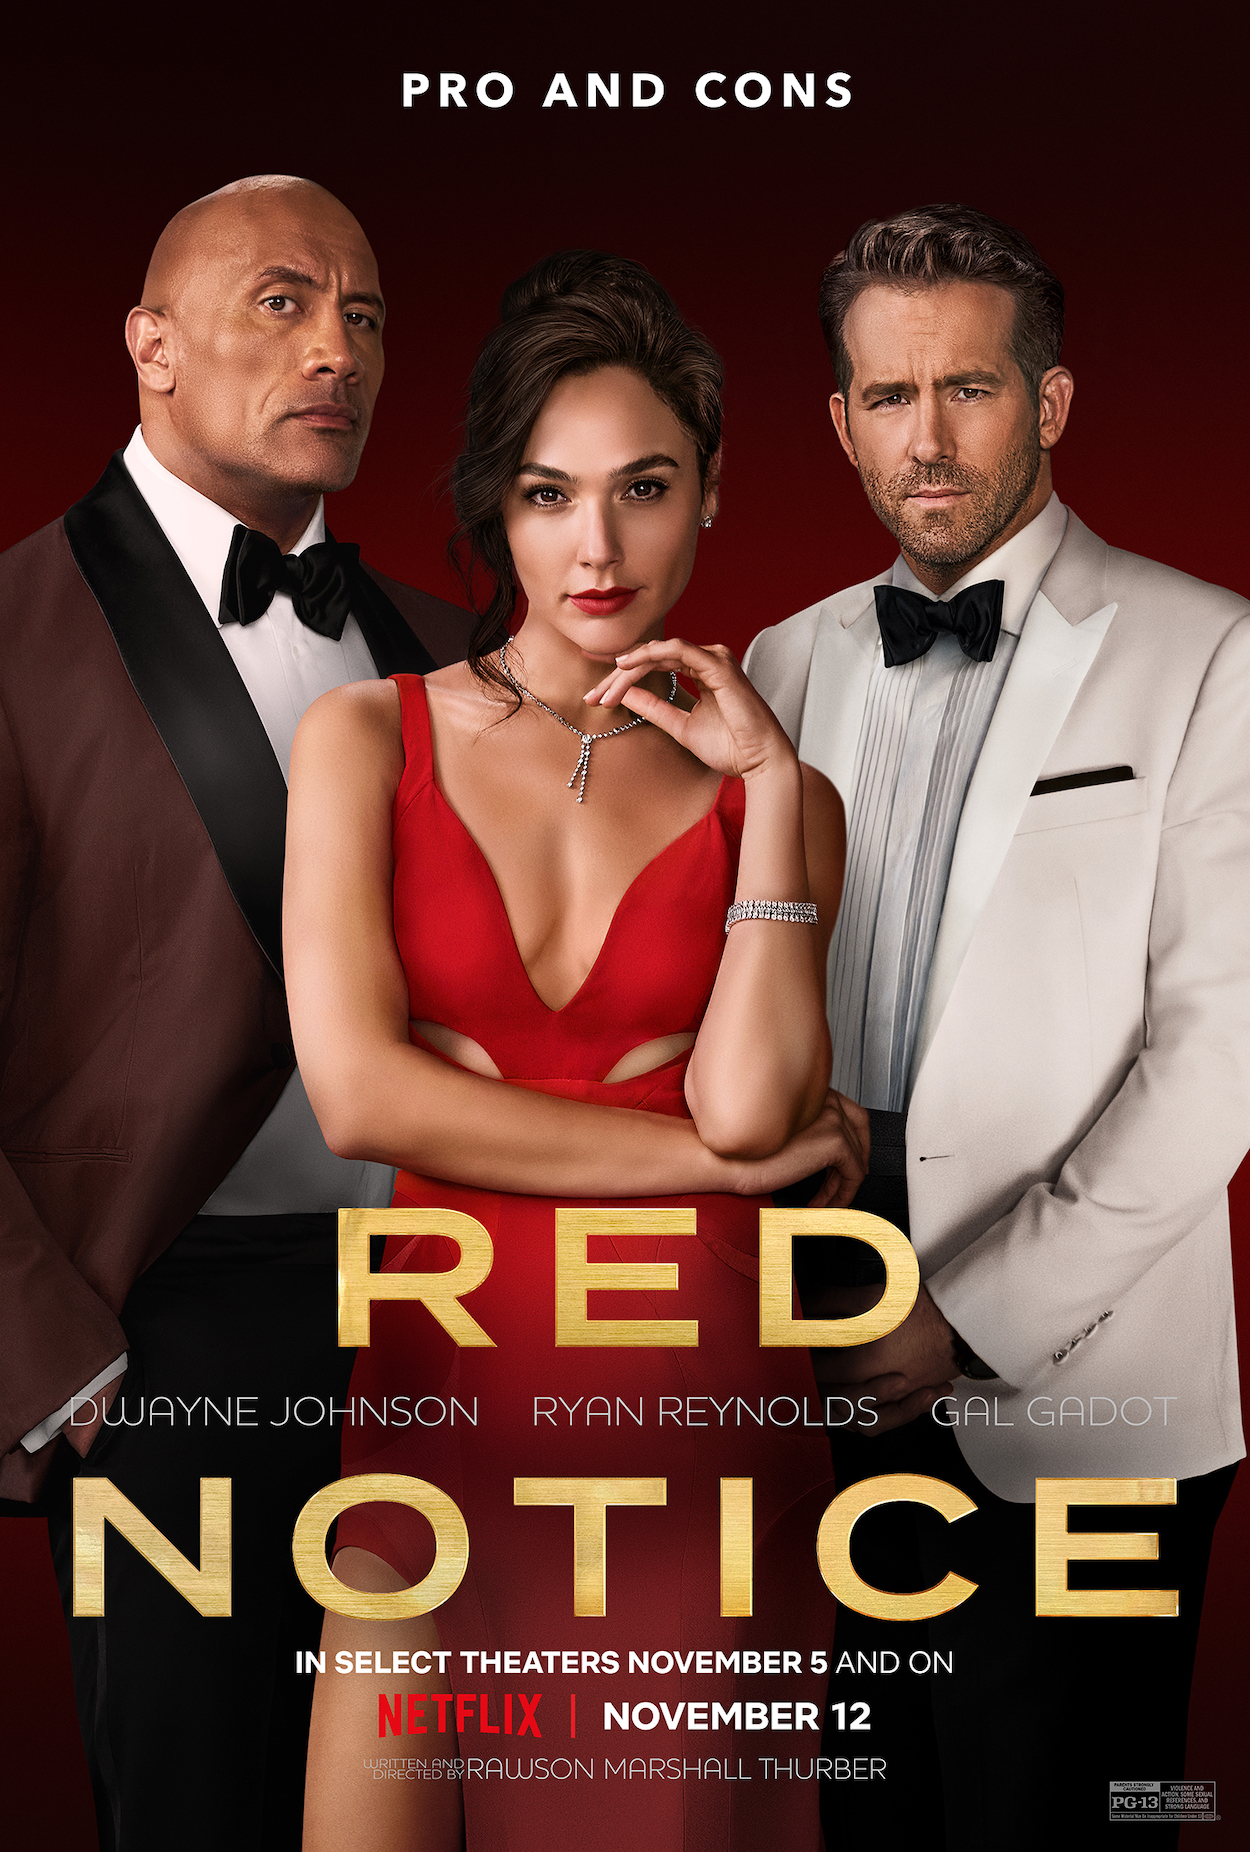 Red Notice (2021), on Netflix